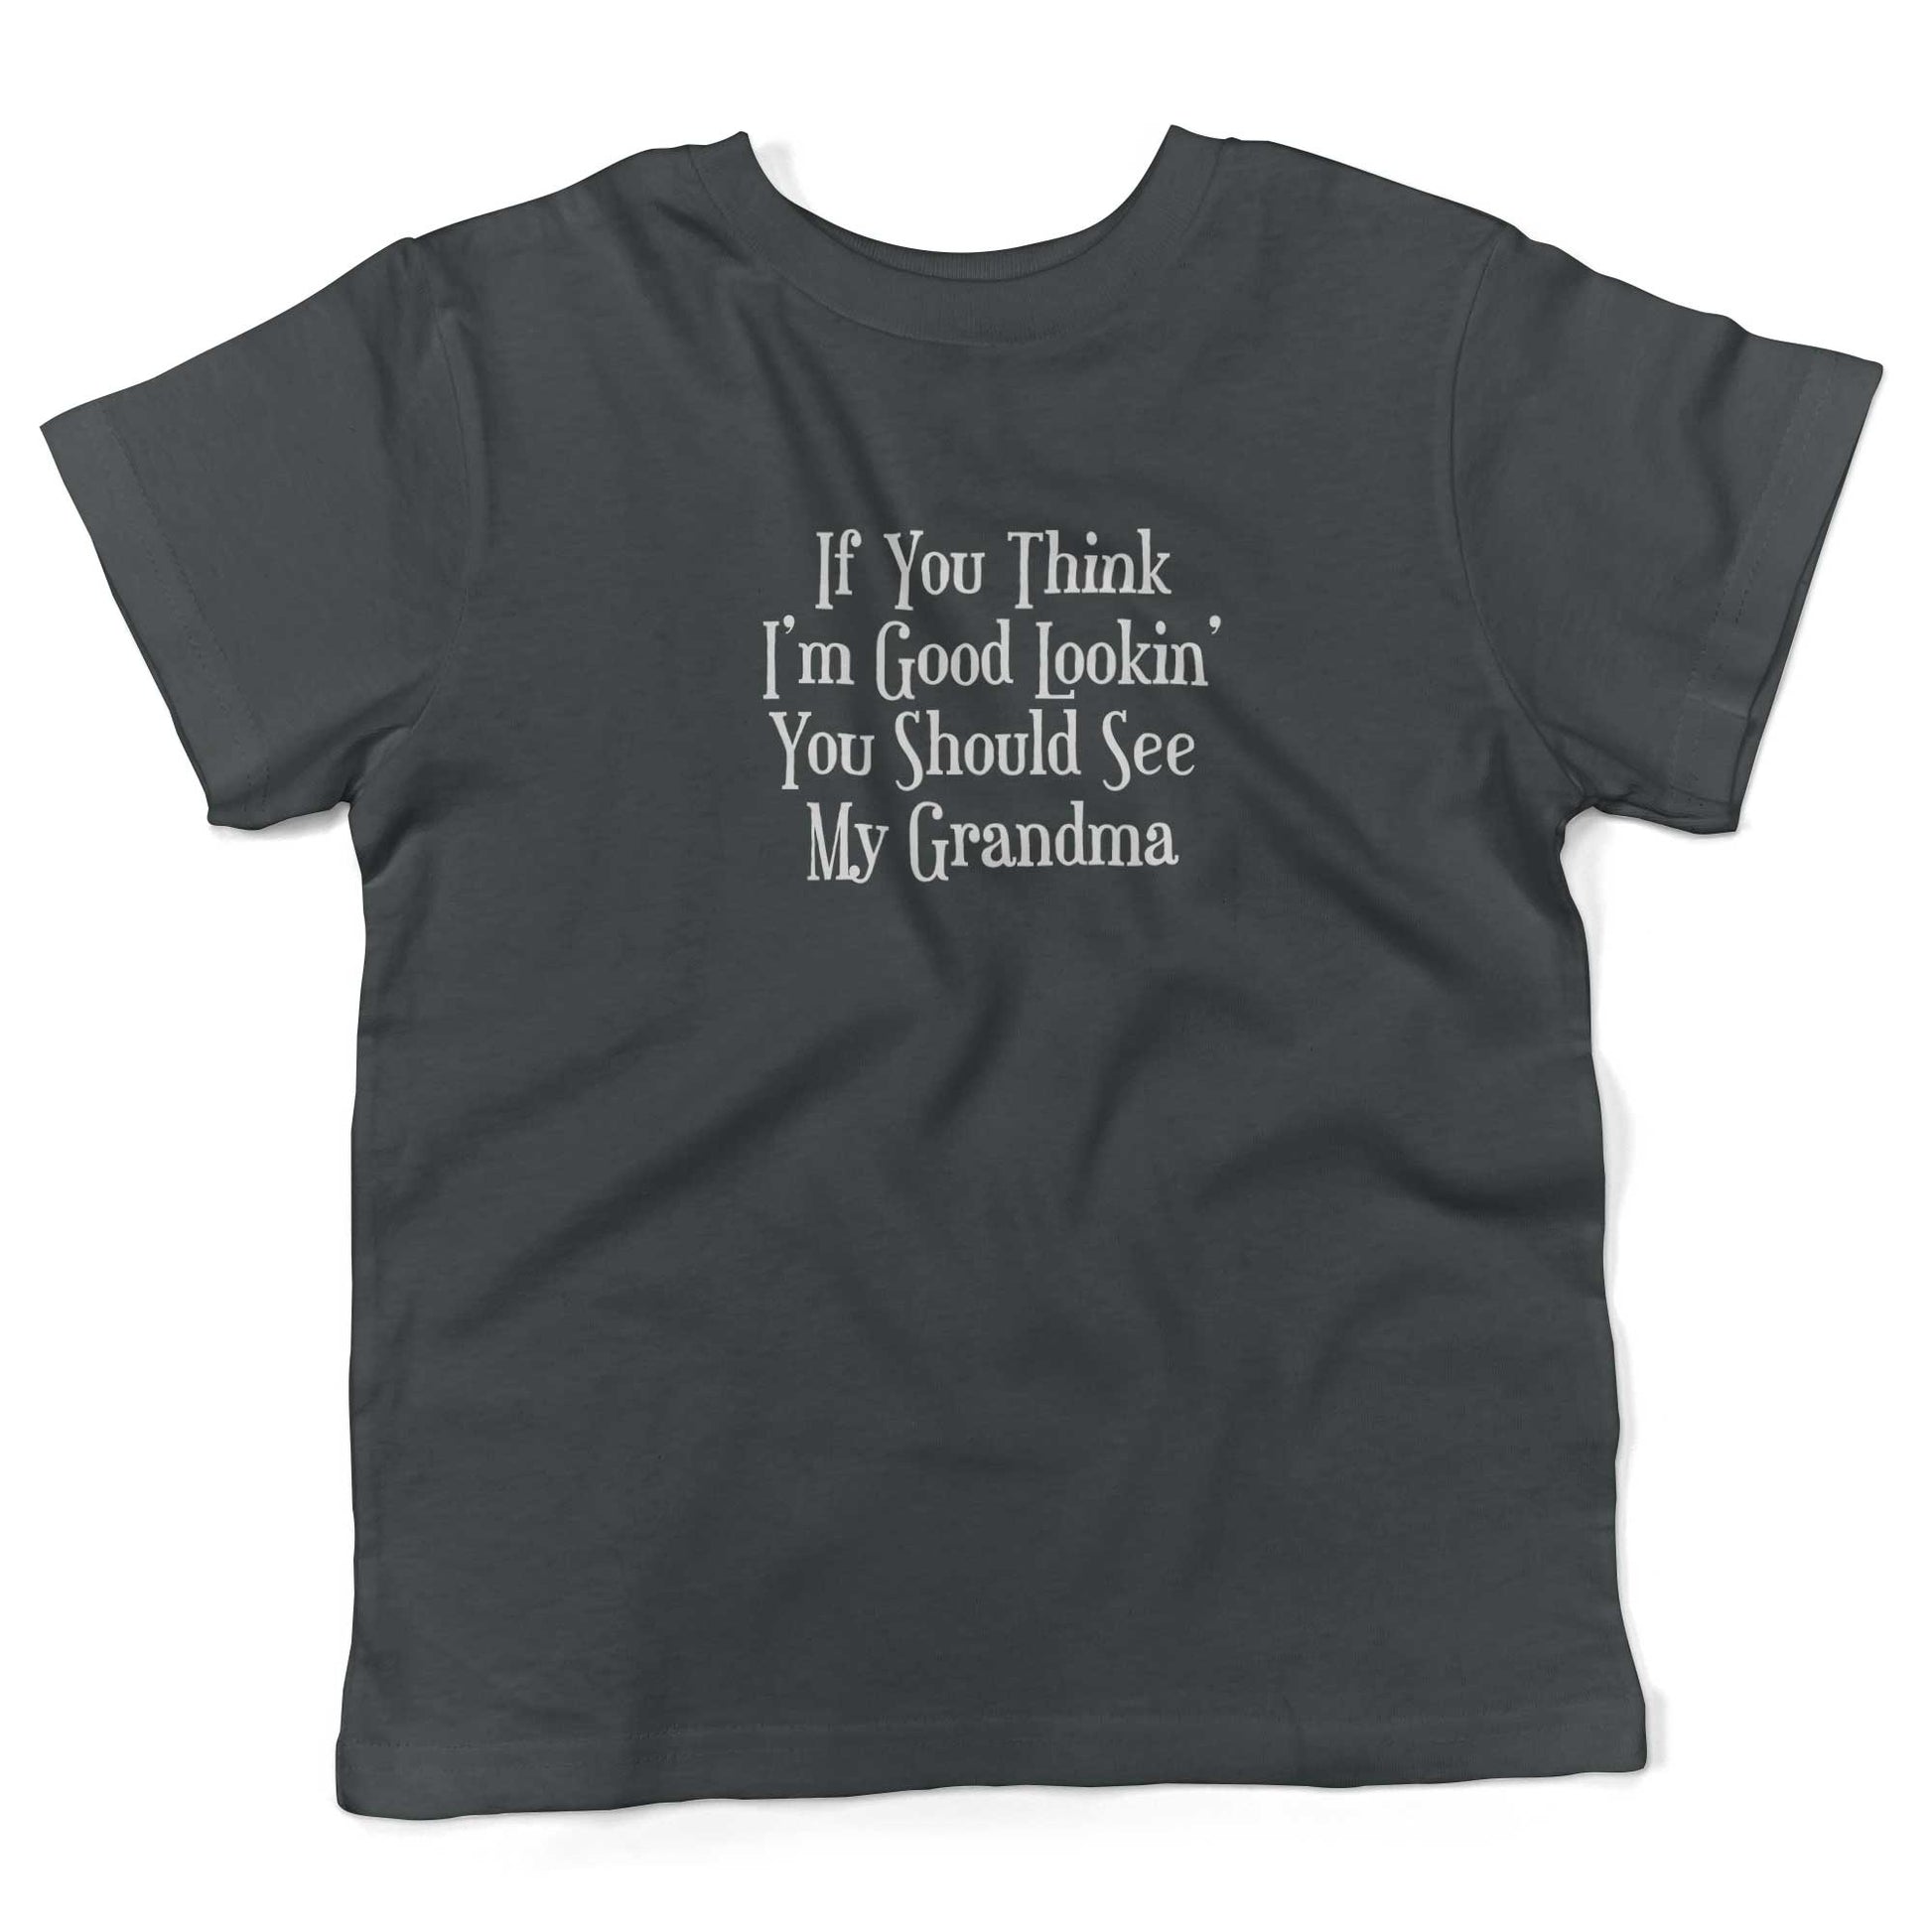 If You Think I'm Good Lookin', You Should See My Grandma Toddler Shirt-Asphalt-2T